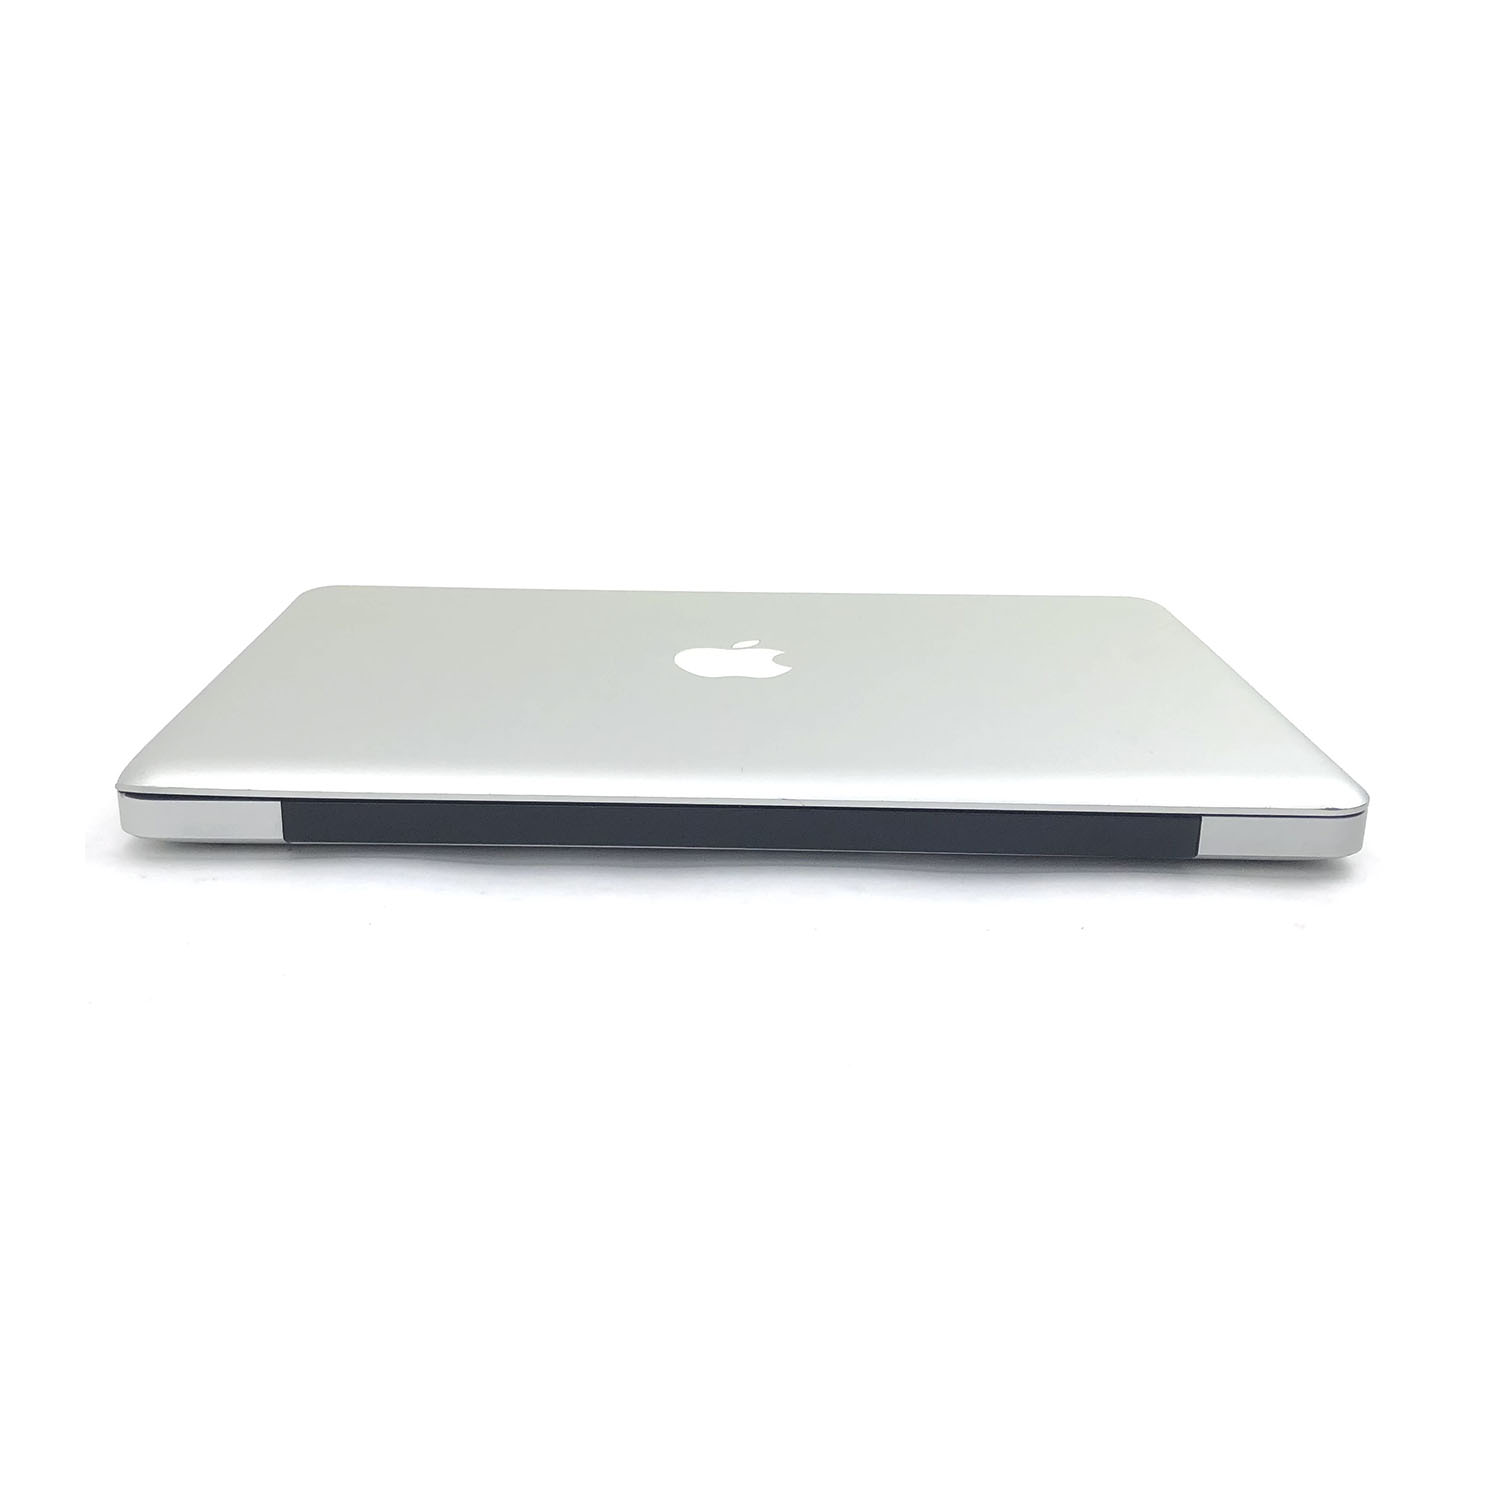 Macbook Pro 13 I5 2.5ghz 16GB 256GB SSD  MD101LL/A  Seminovo